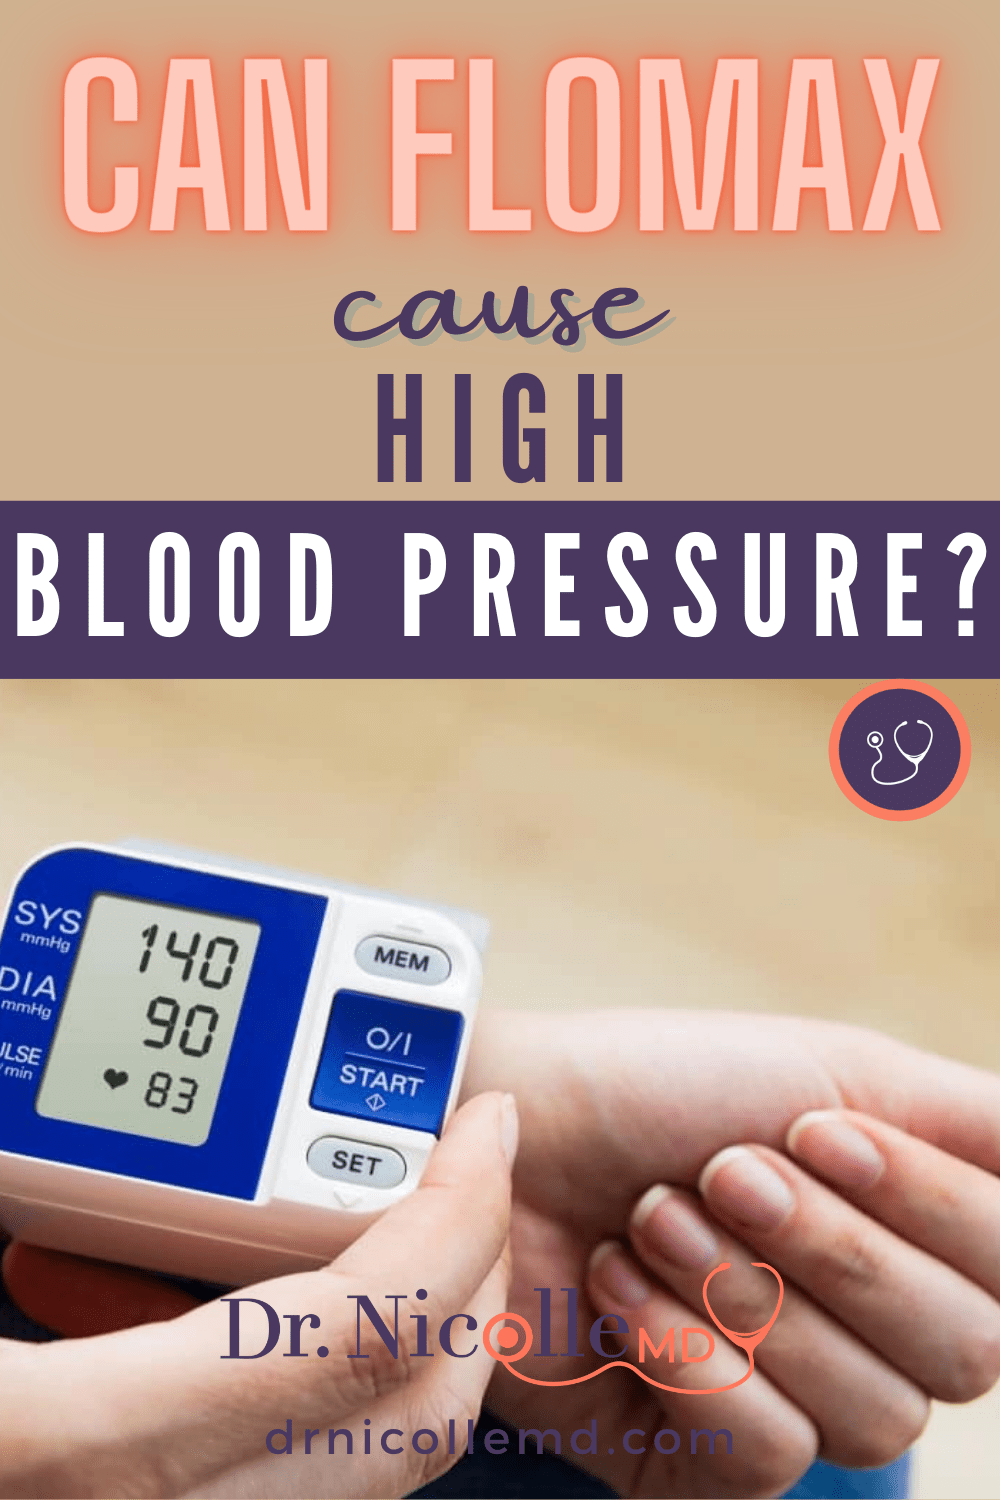 Can Flomax Cause High Blood Pressure?